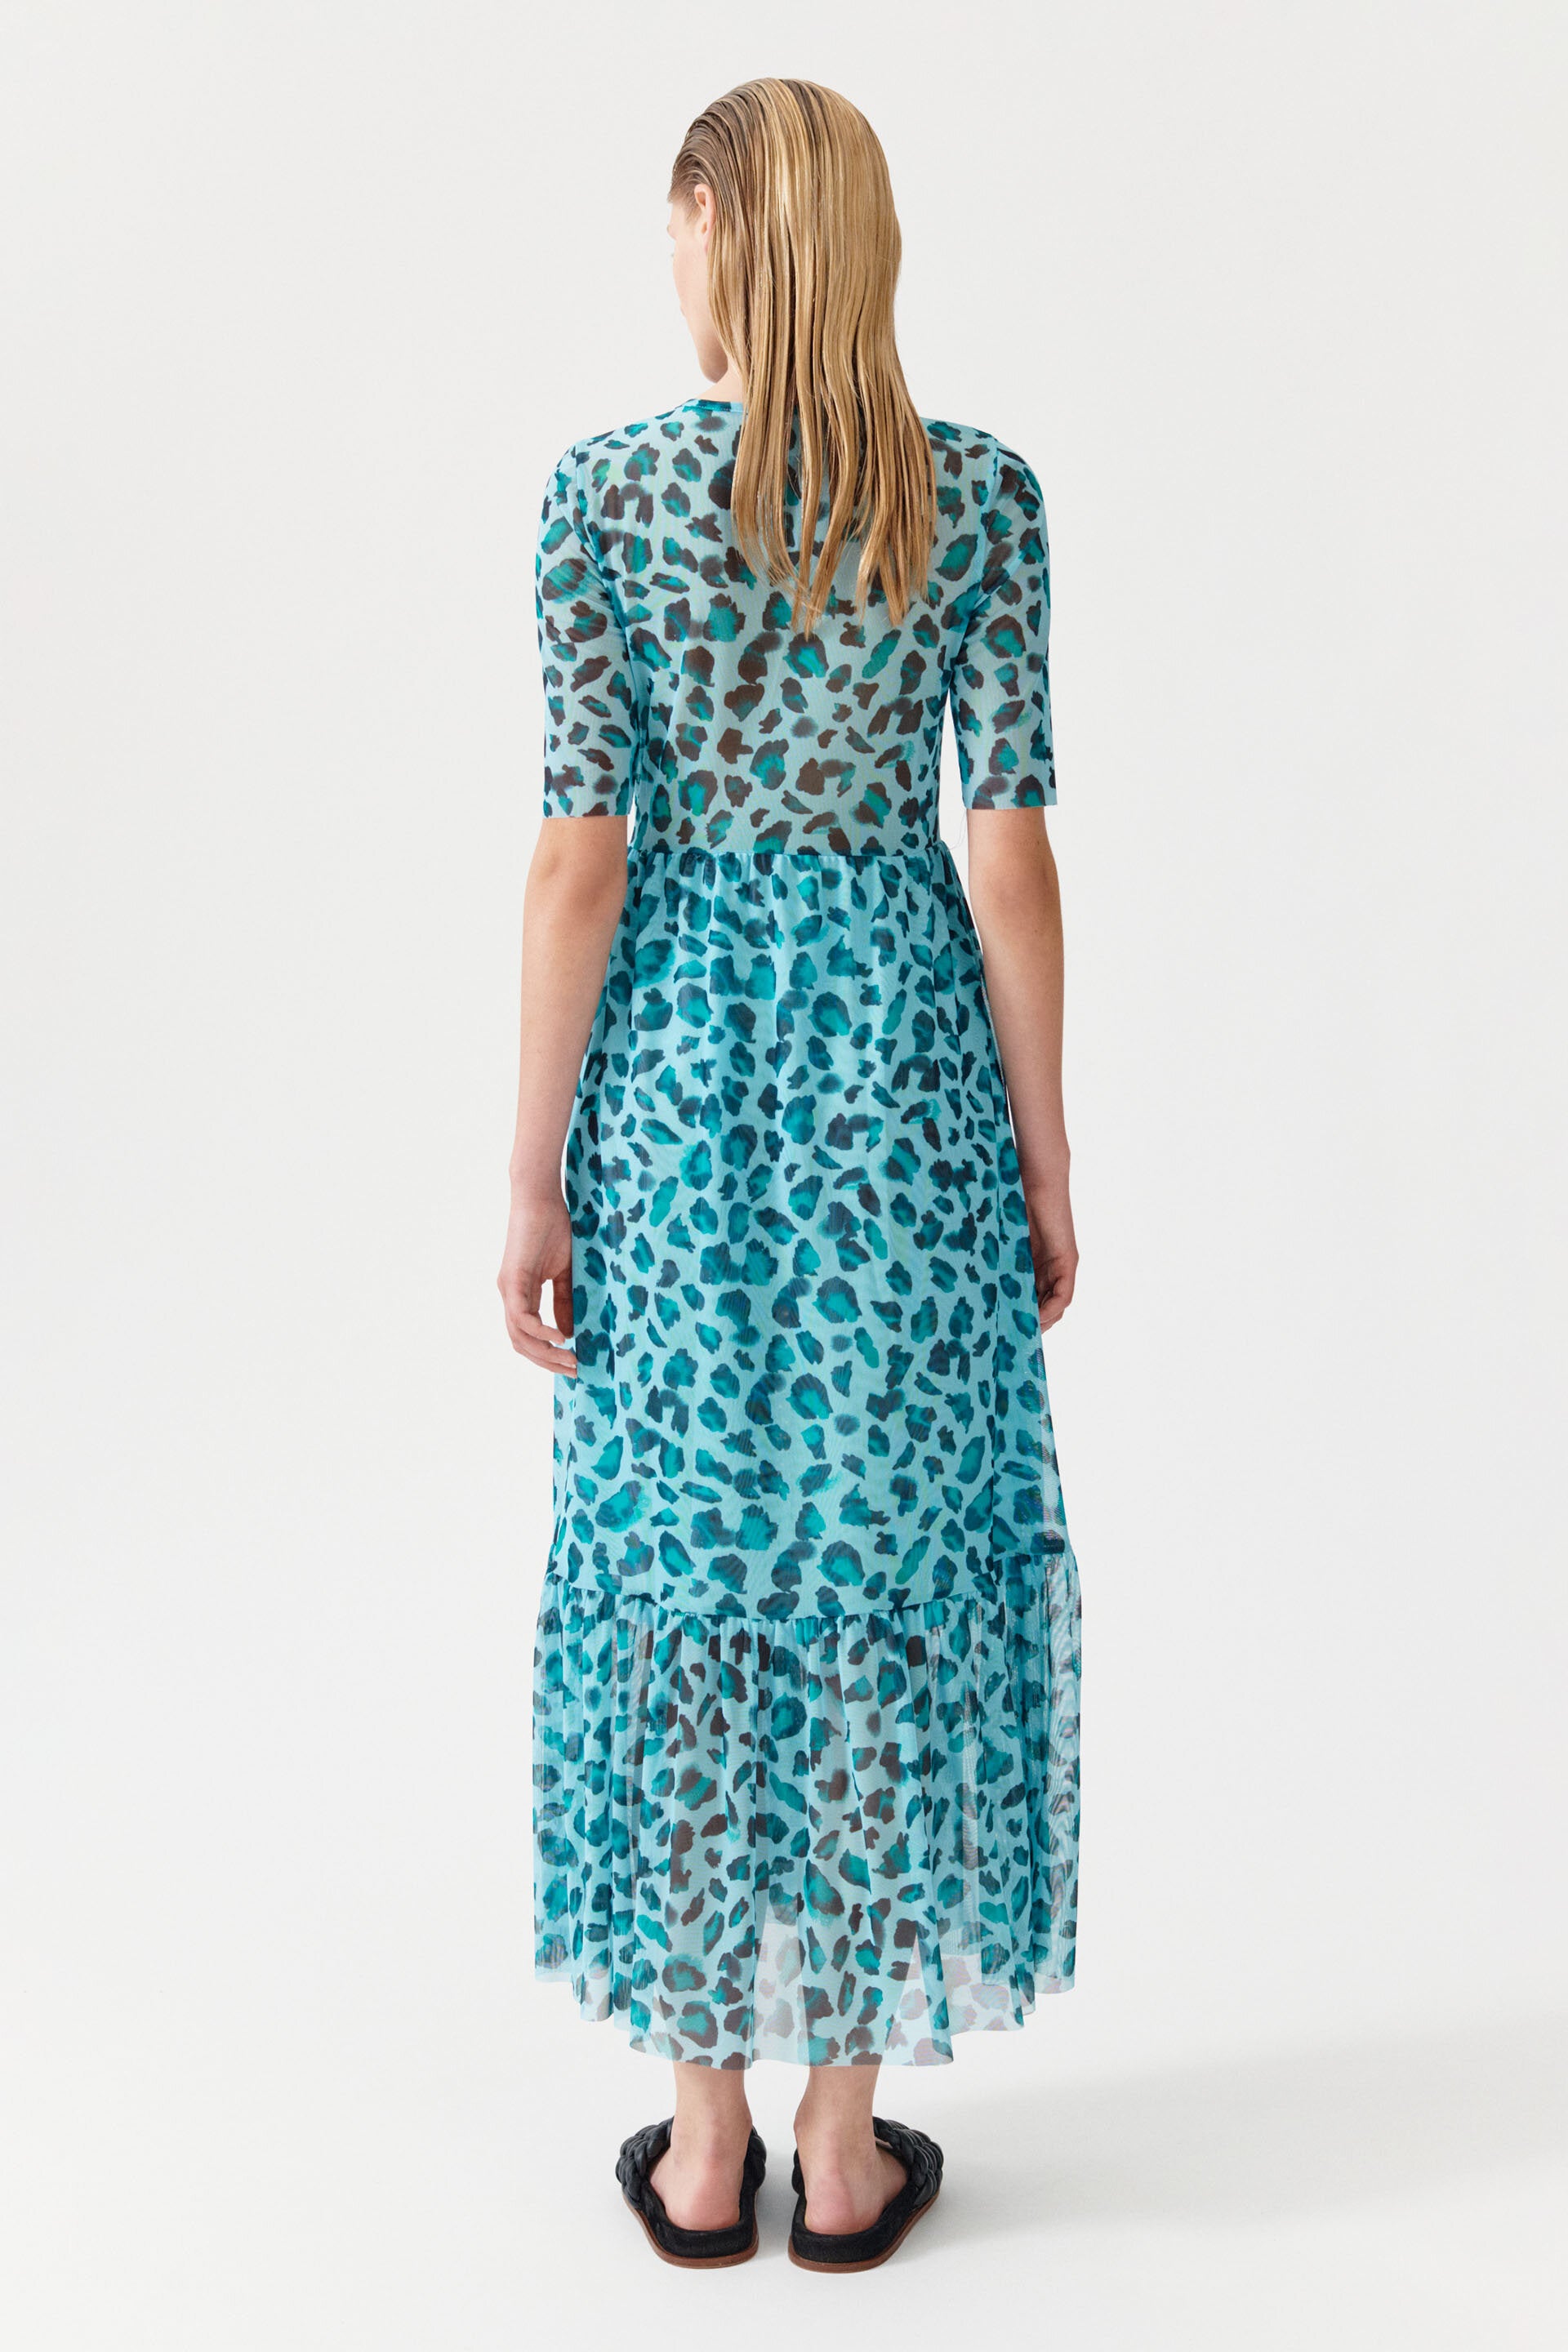 Joslin Pacific Leopard Dress